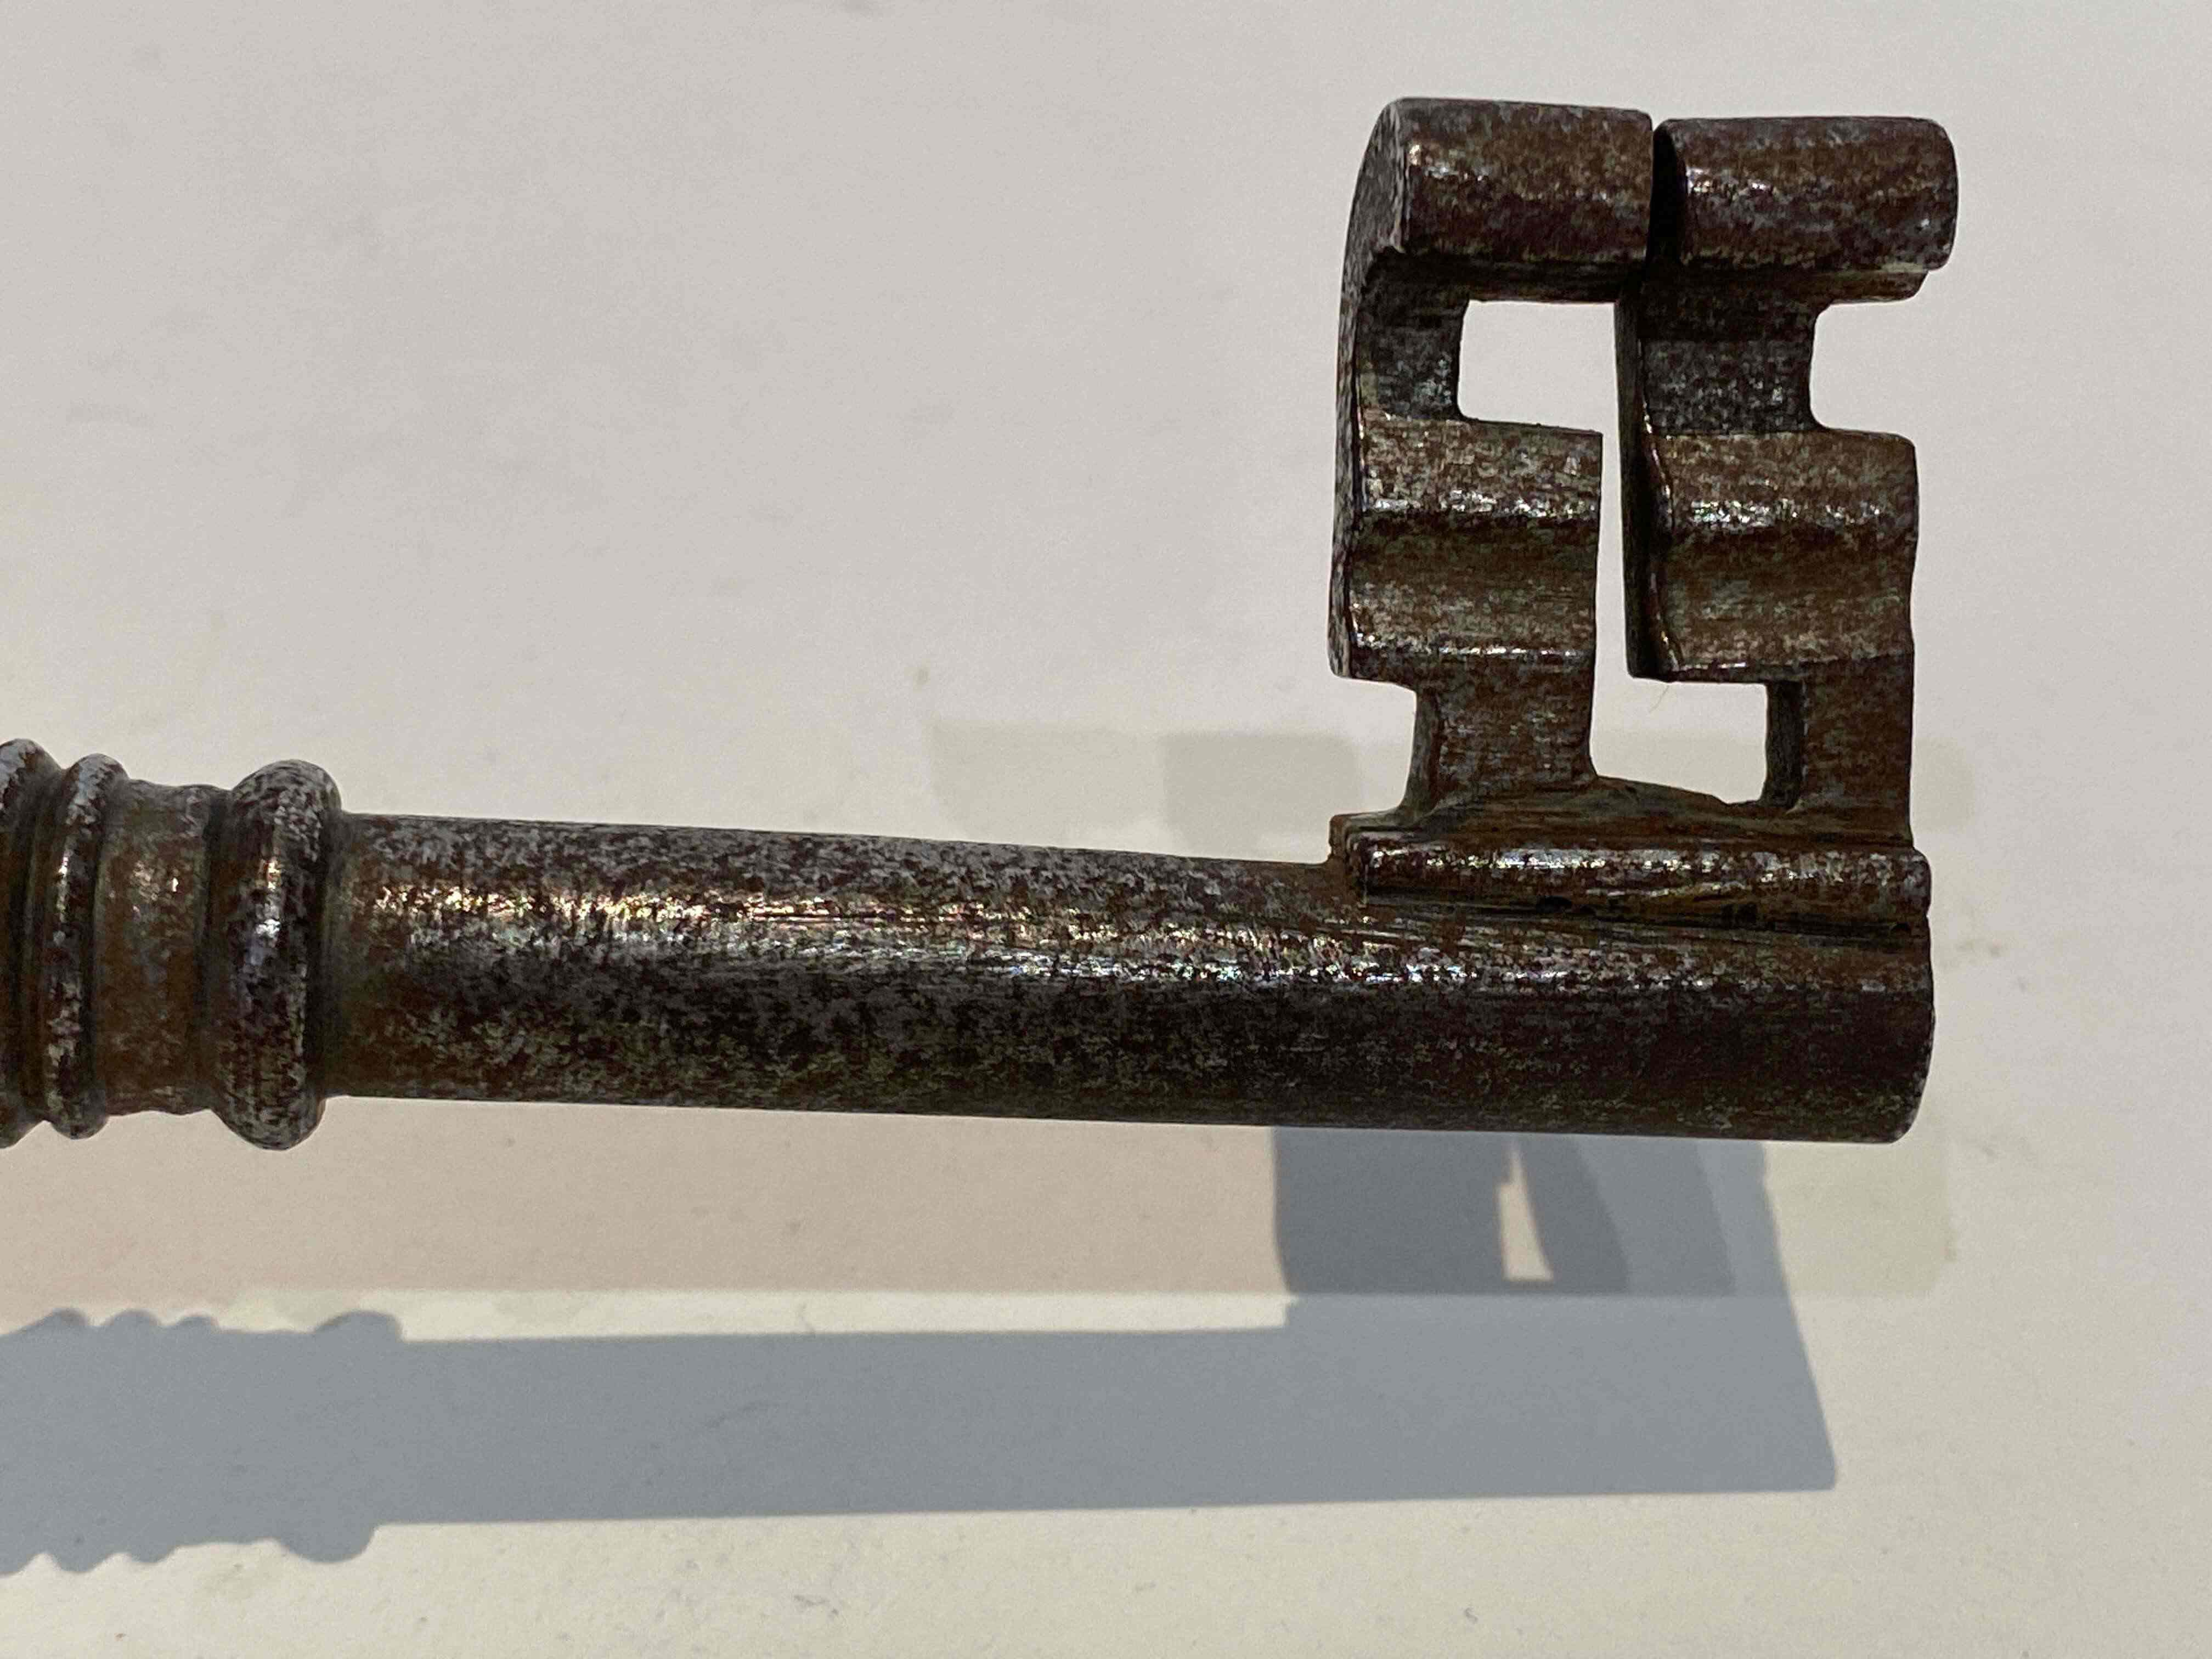 A large VOC iron key, 18th century